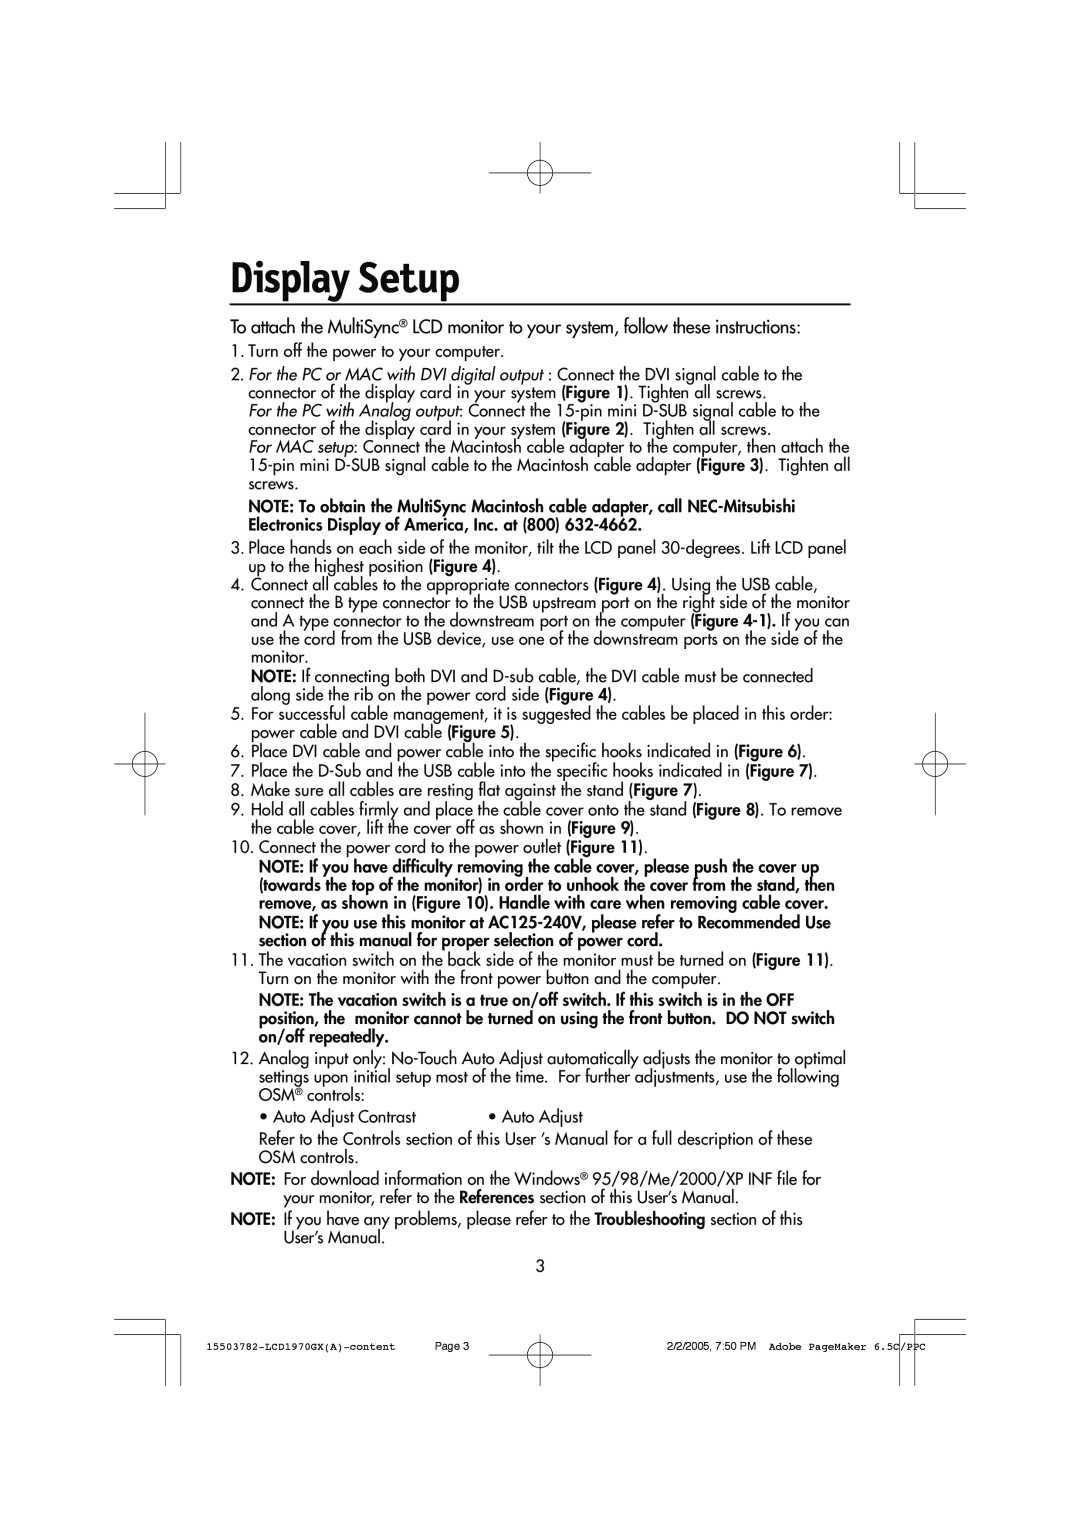 NEC LCD1970GX user manual Display Setup 